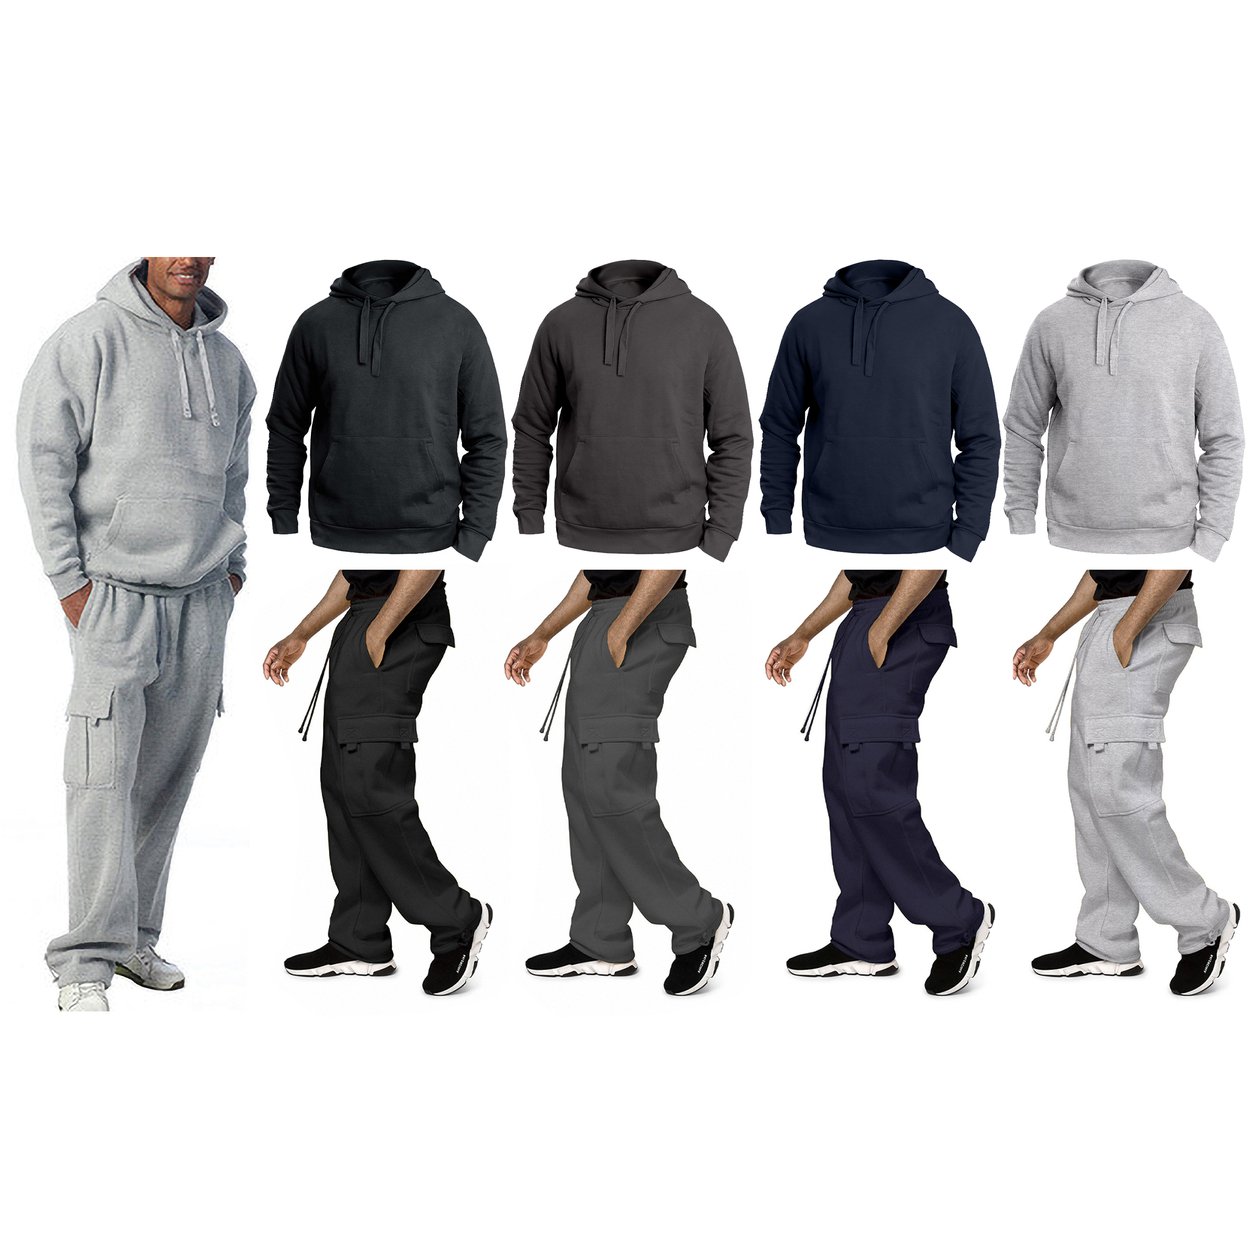 2-Pack: Men's Big & Tall Winter Warm Cozy Athletic Fleece Lined Multi-Pocket Cargo Sweatsuit - Navy, Xx-large